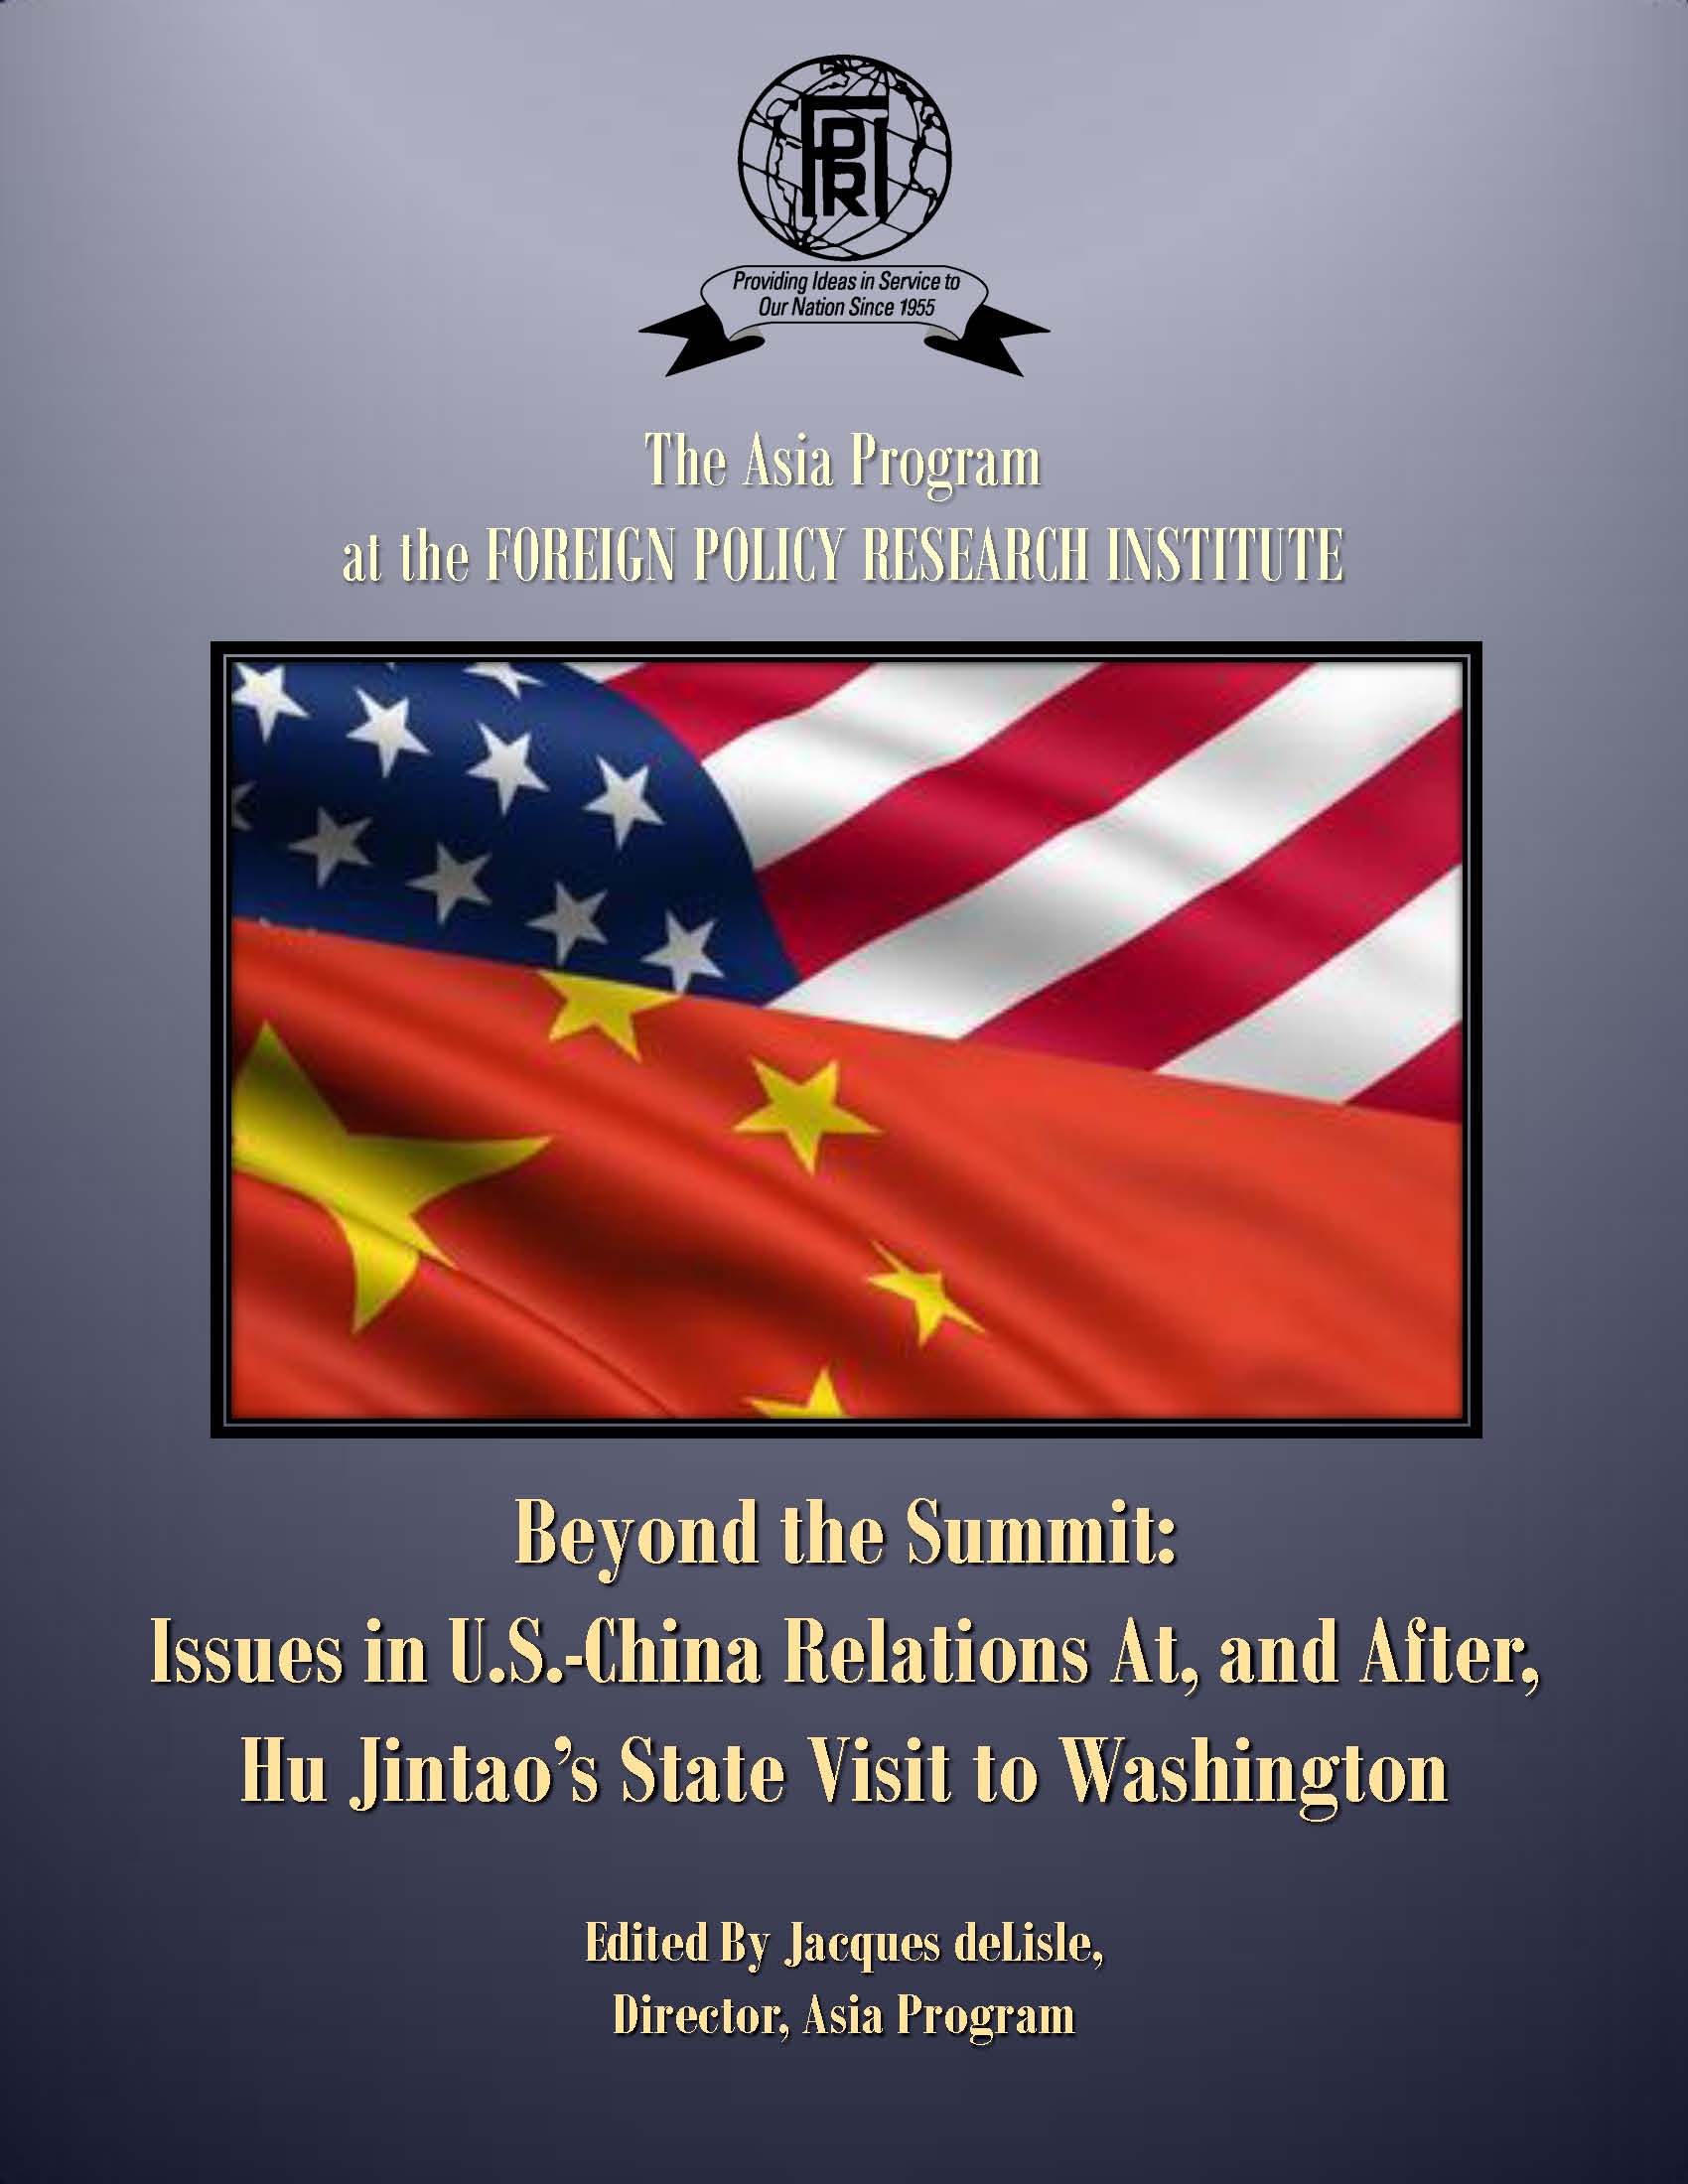 The Hu-Obama Summit and U.S.-China Relations